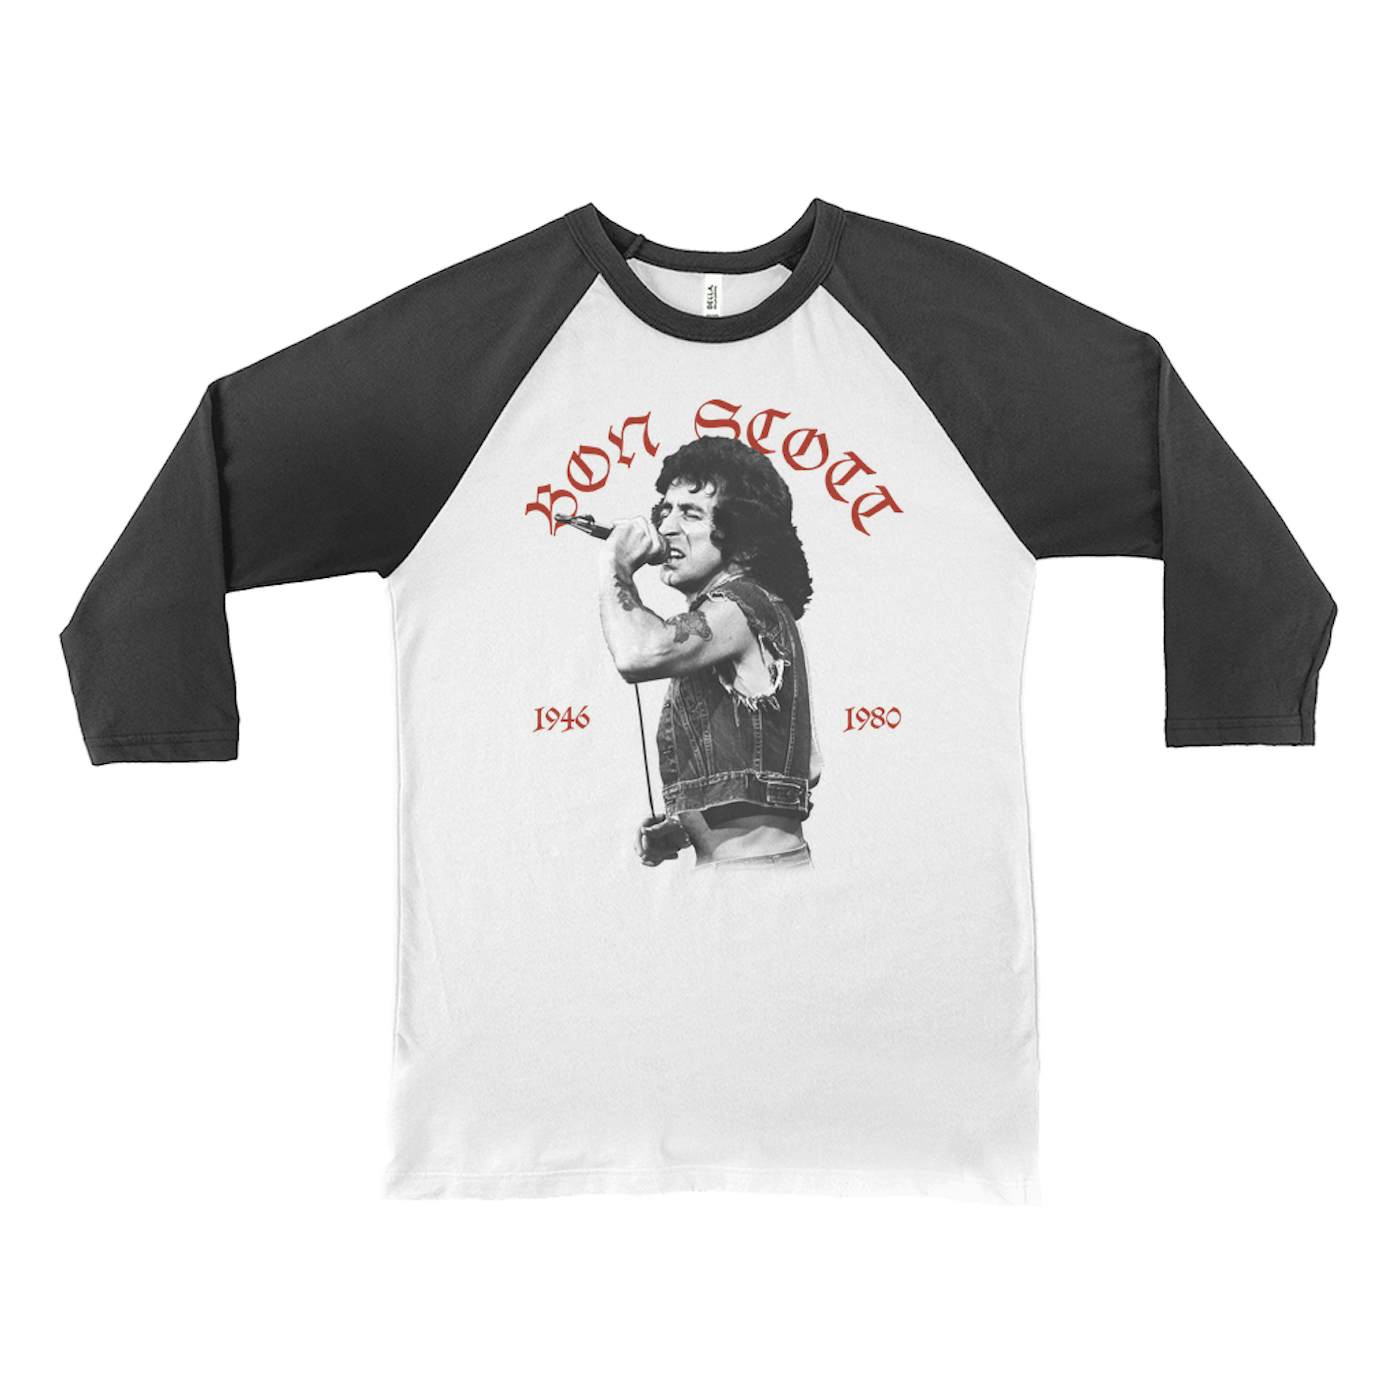 Bon Scott 3/4 Sleeve Baseball Tee | Old English 1946-1980 Bon Scott Shirt